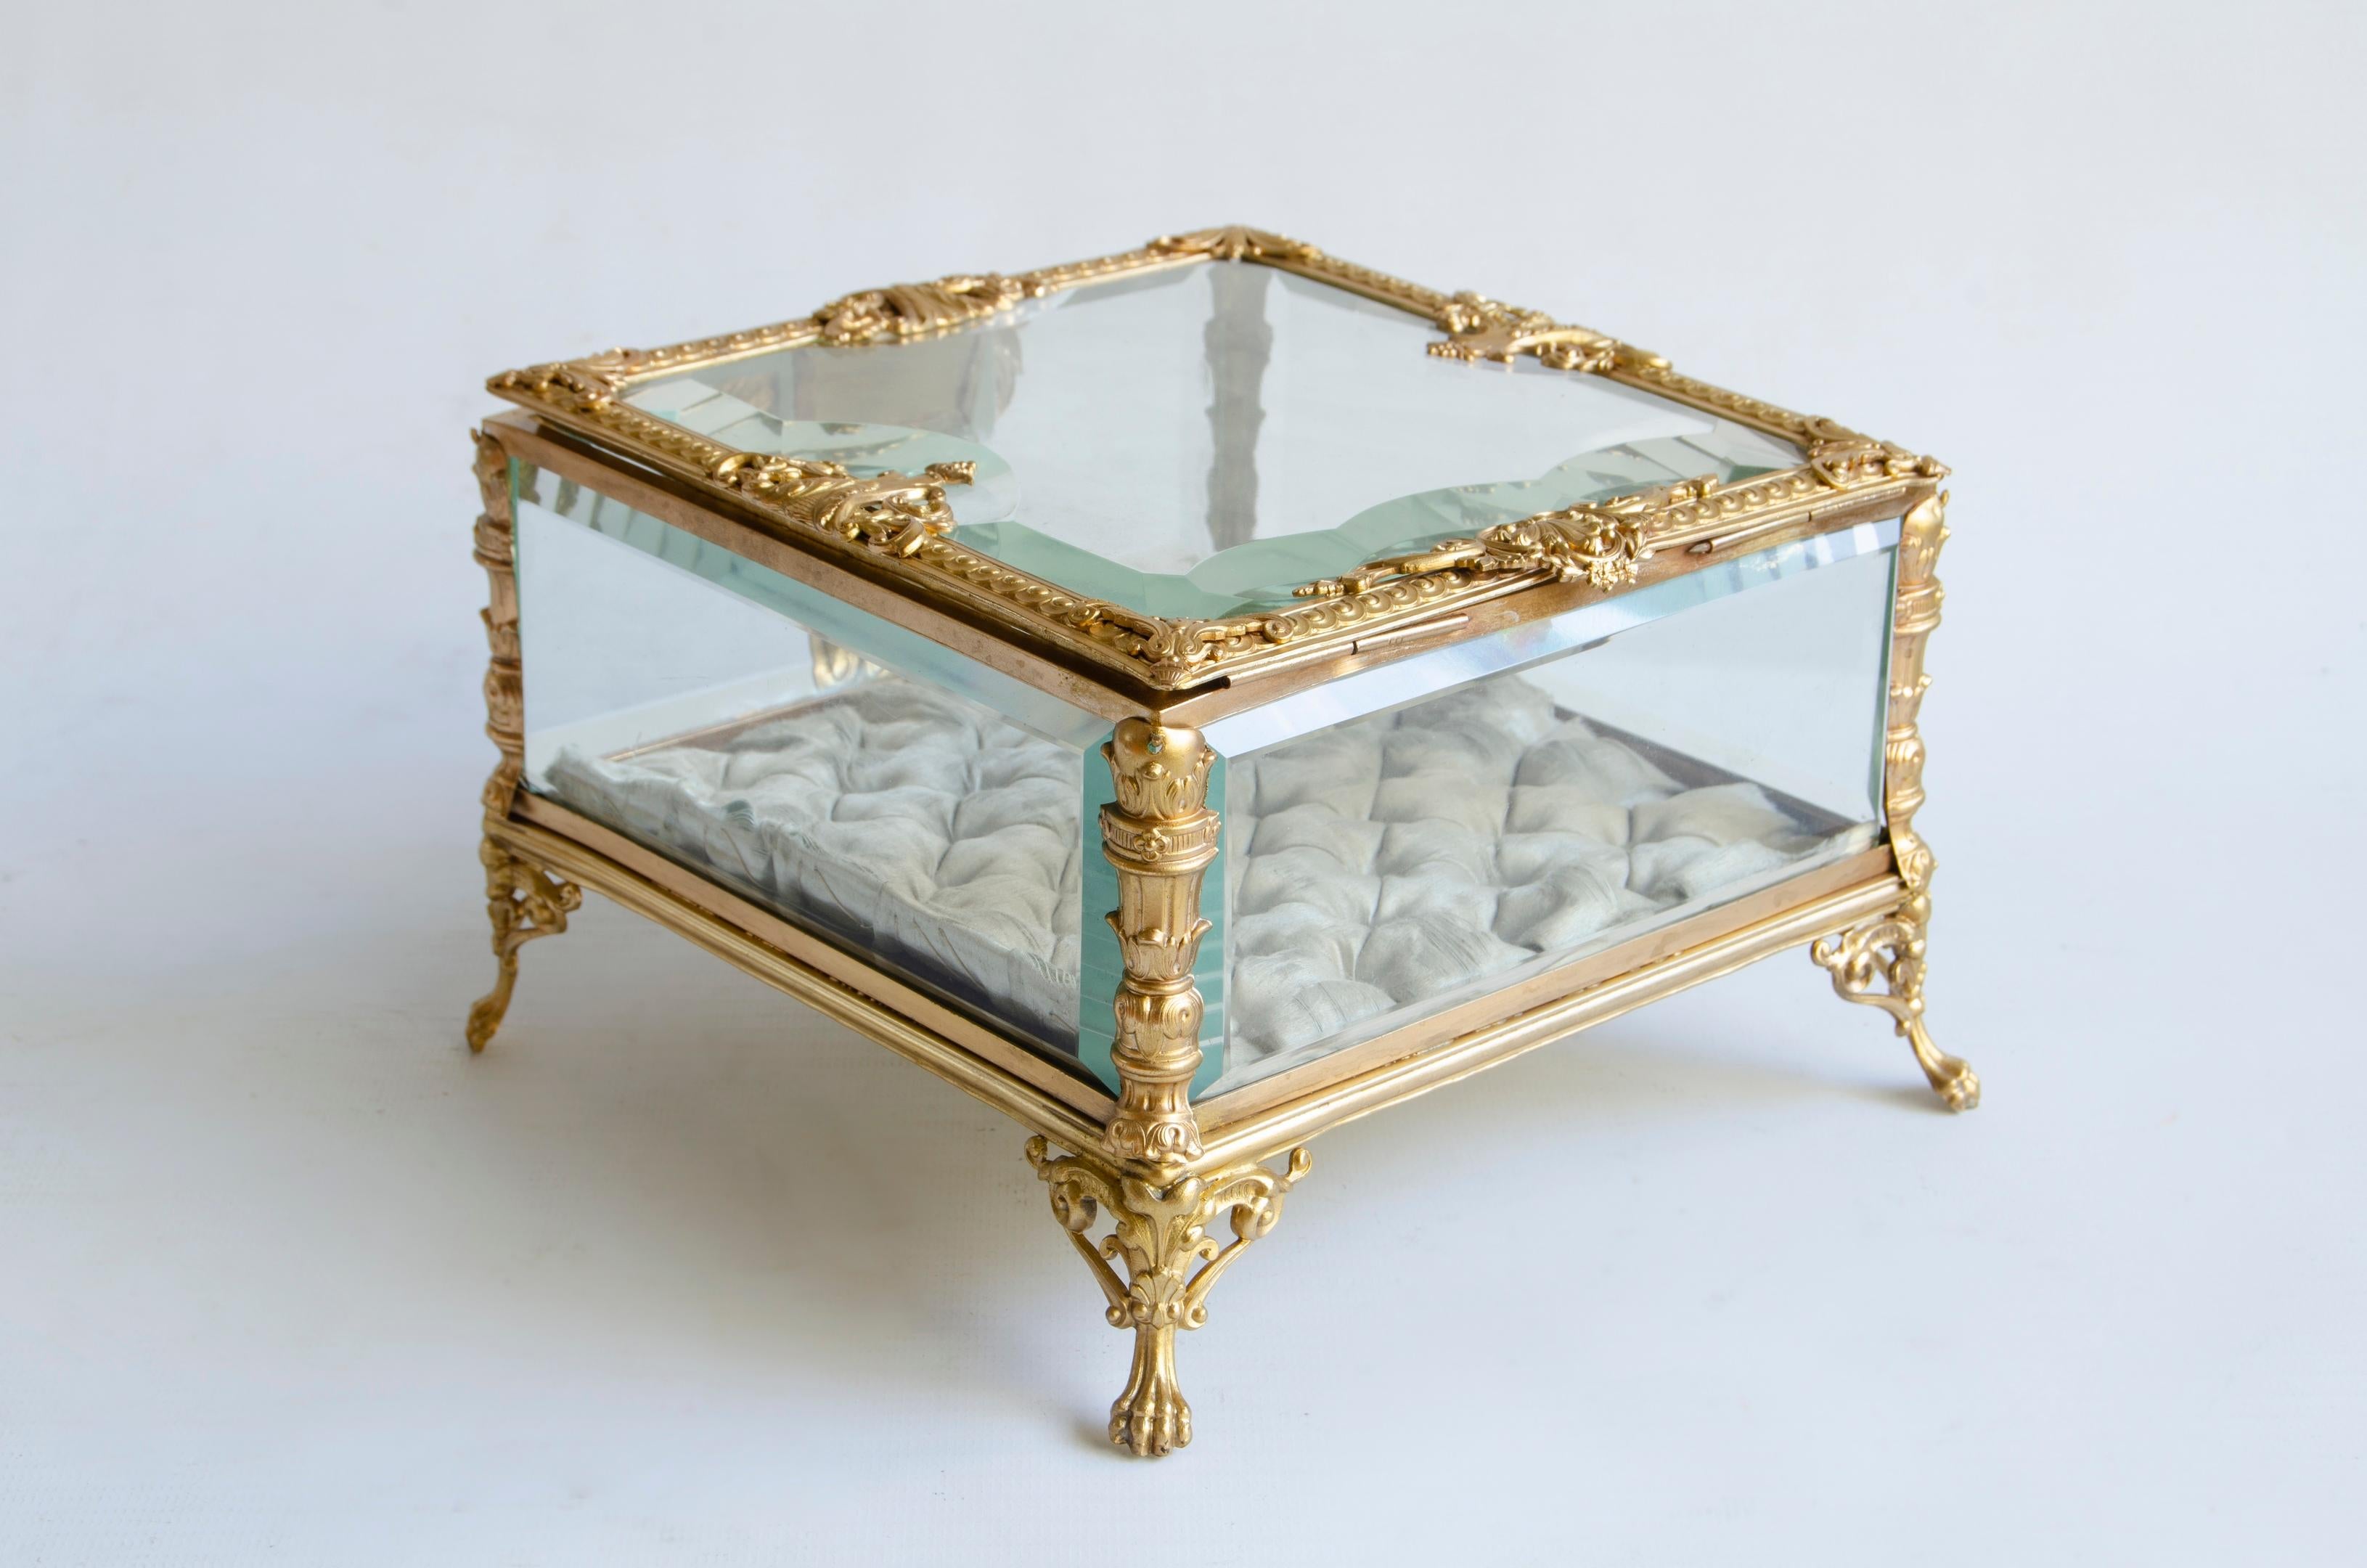 Crystal and bronze jewel box
circa 1930
upholstered interior capitone
vice-laminated glasses
origin france.